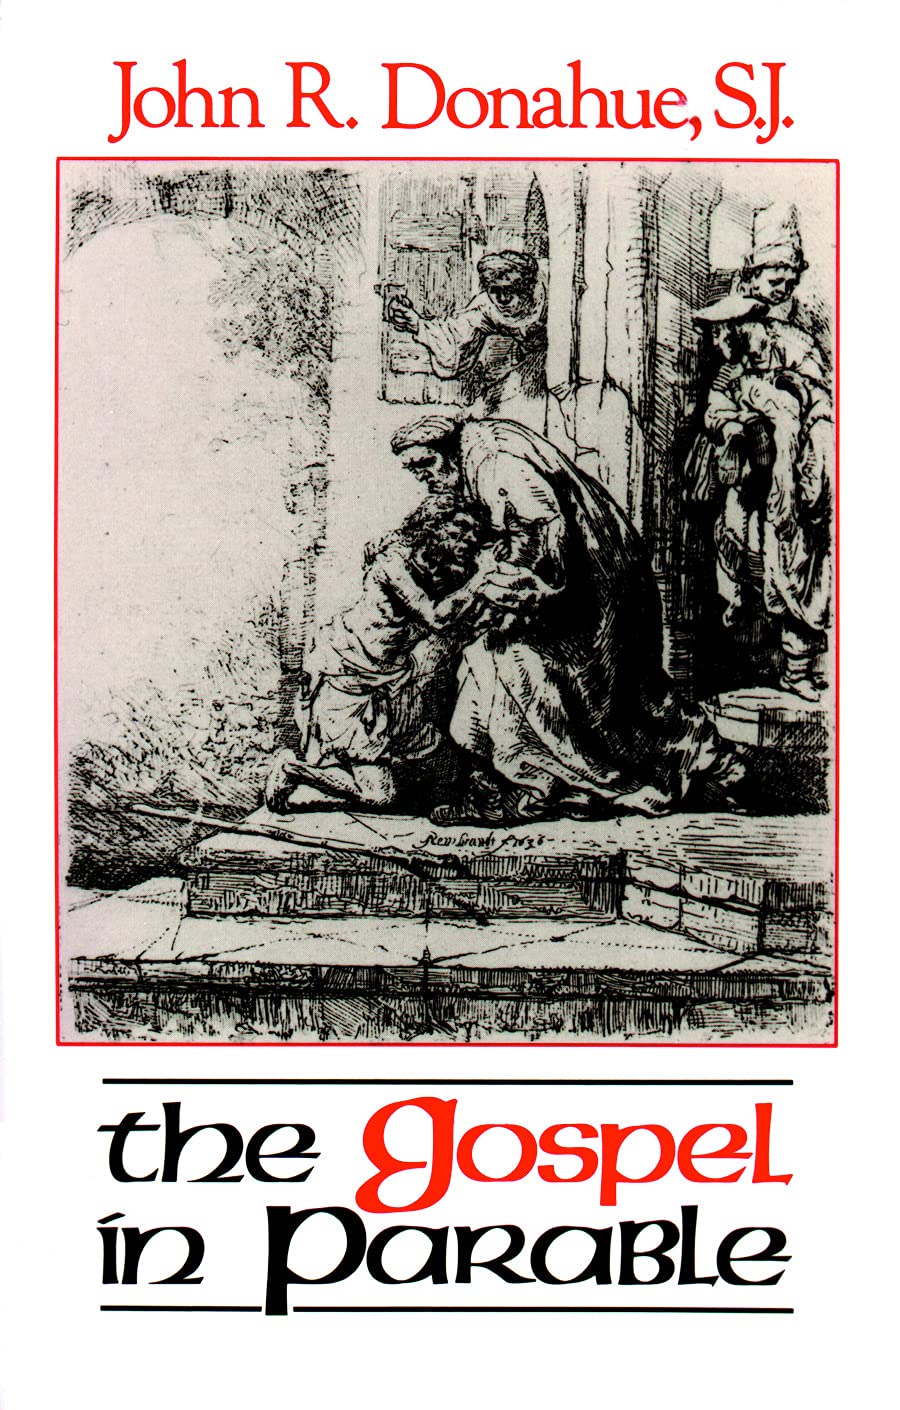 The Gospel in Parable, by Fr. John R. Donohue, SJ